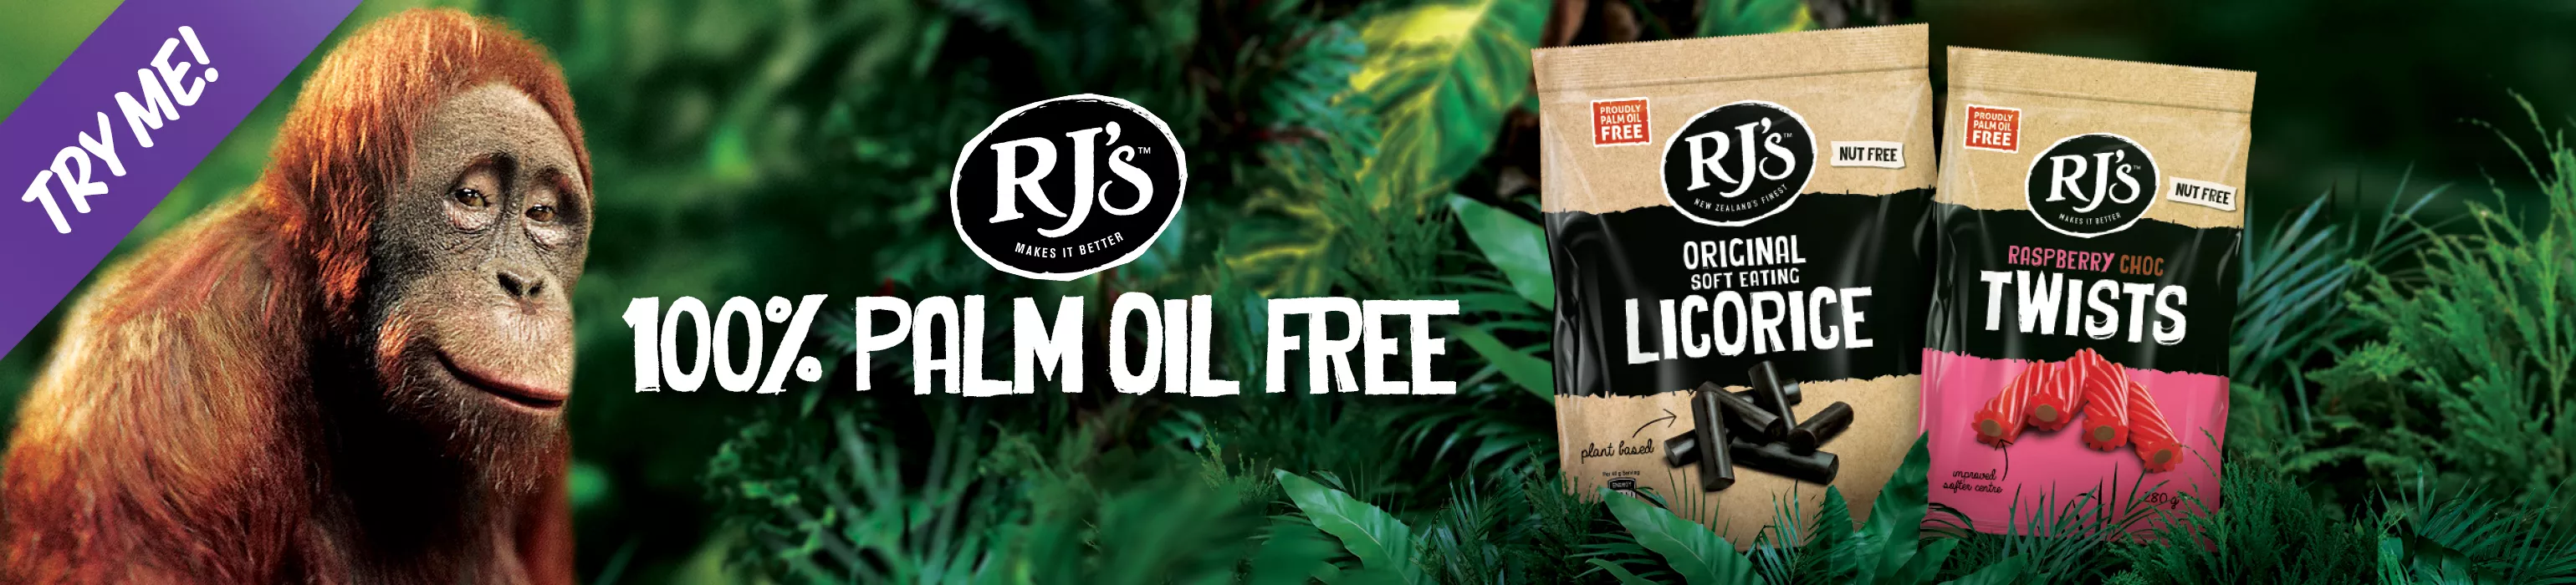 RJ's - Proudly 100% Palm Oil Free!